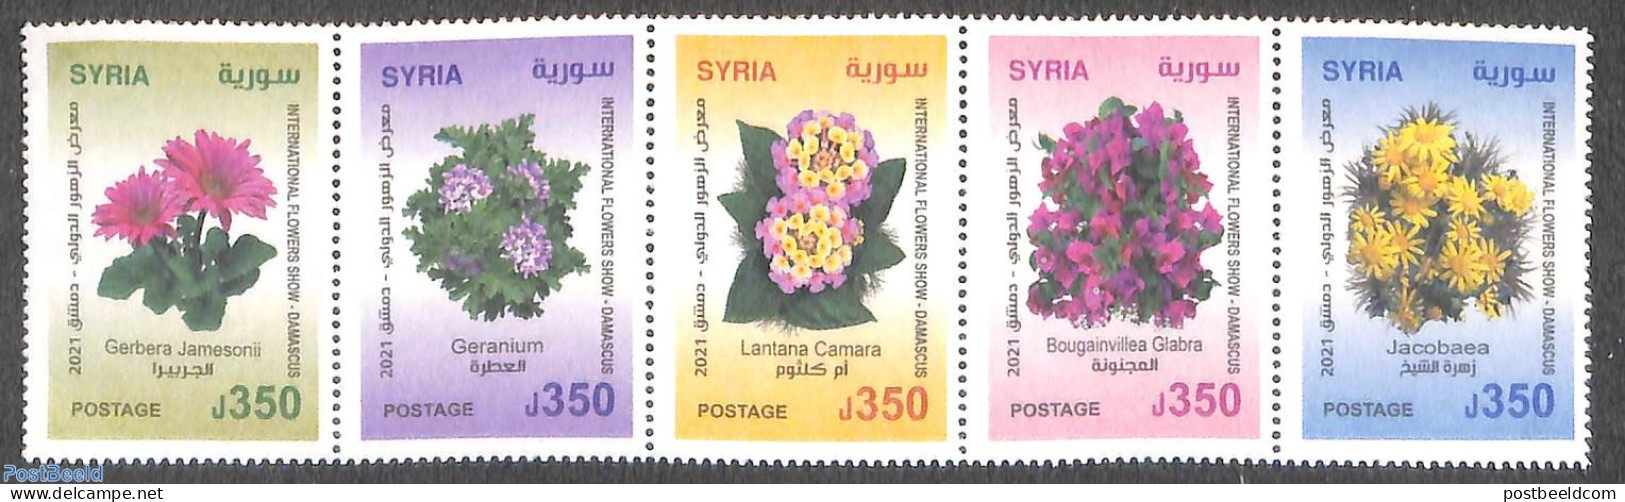 Syria 2021 Flowers 5v [::::], Mint NH, Nature - Flowers & Plants - Siria